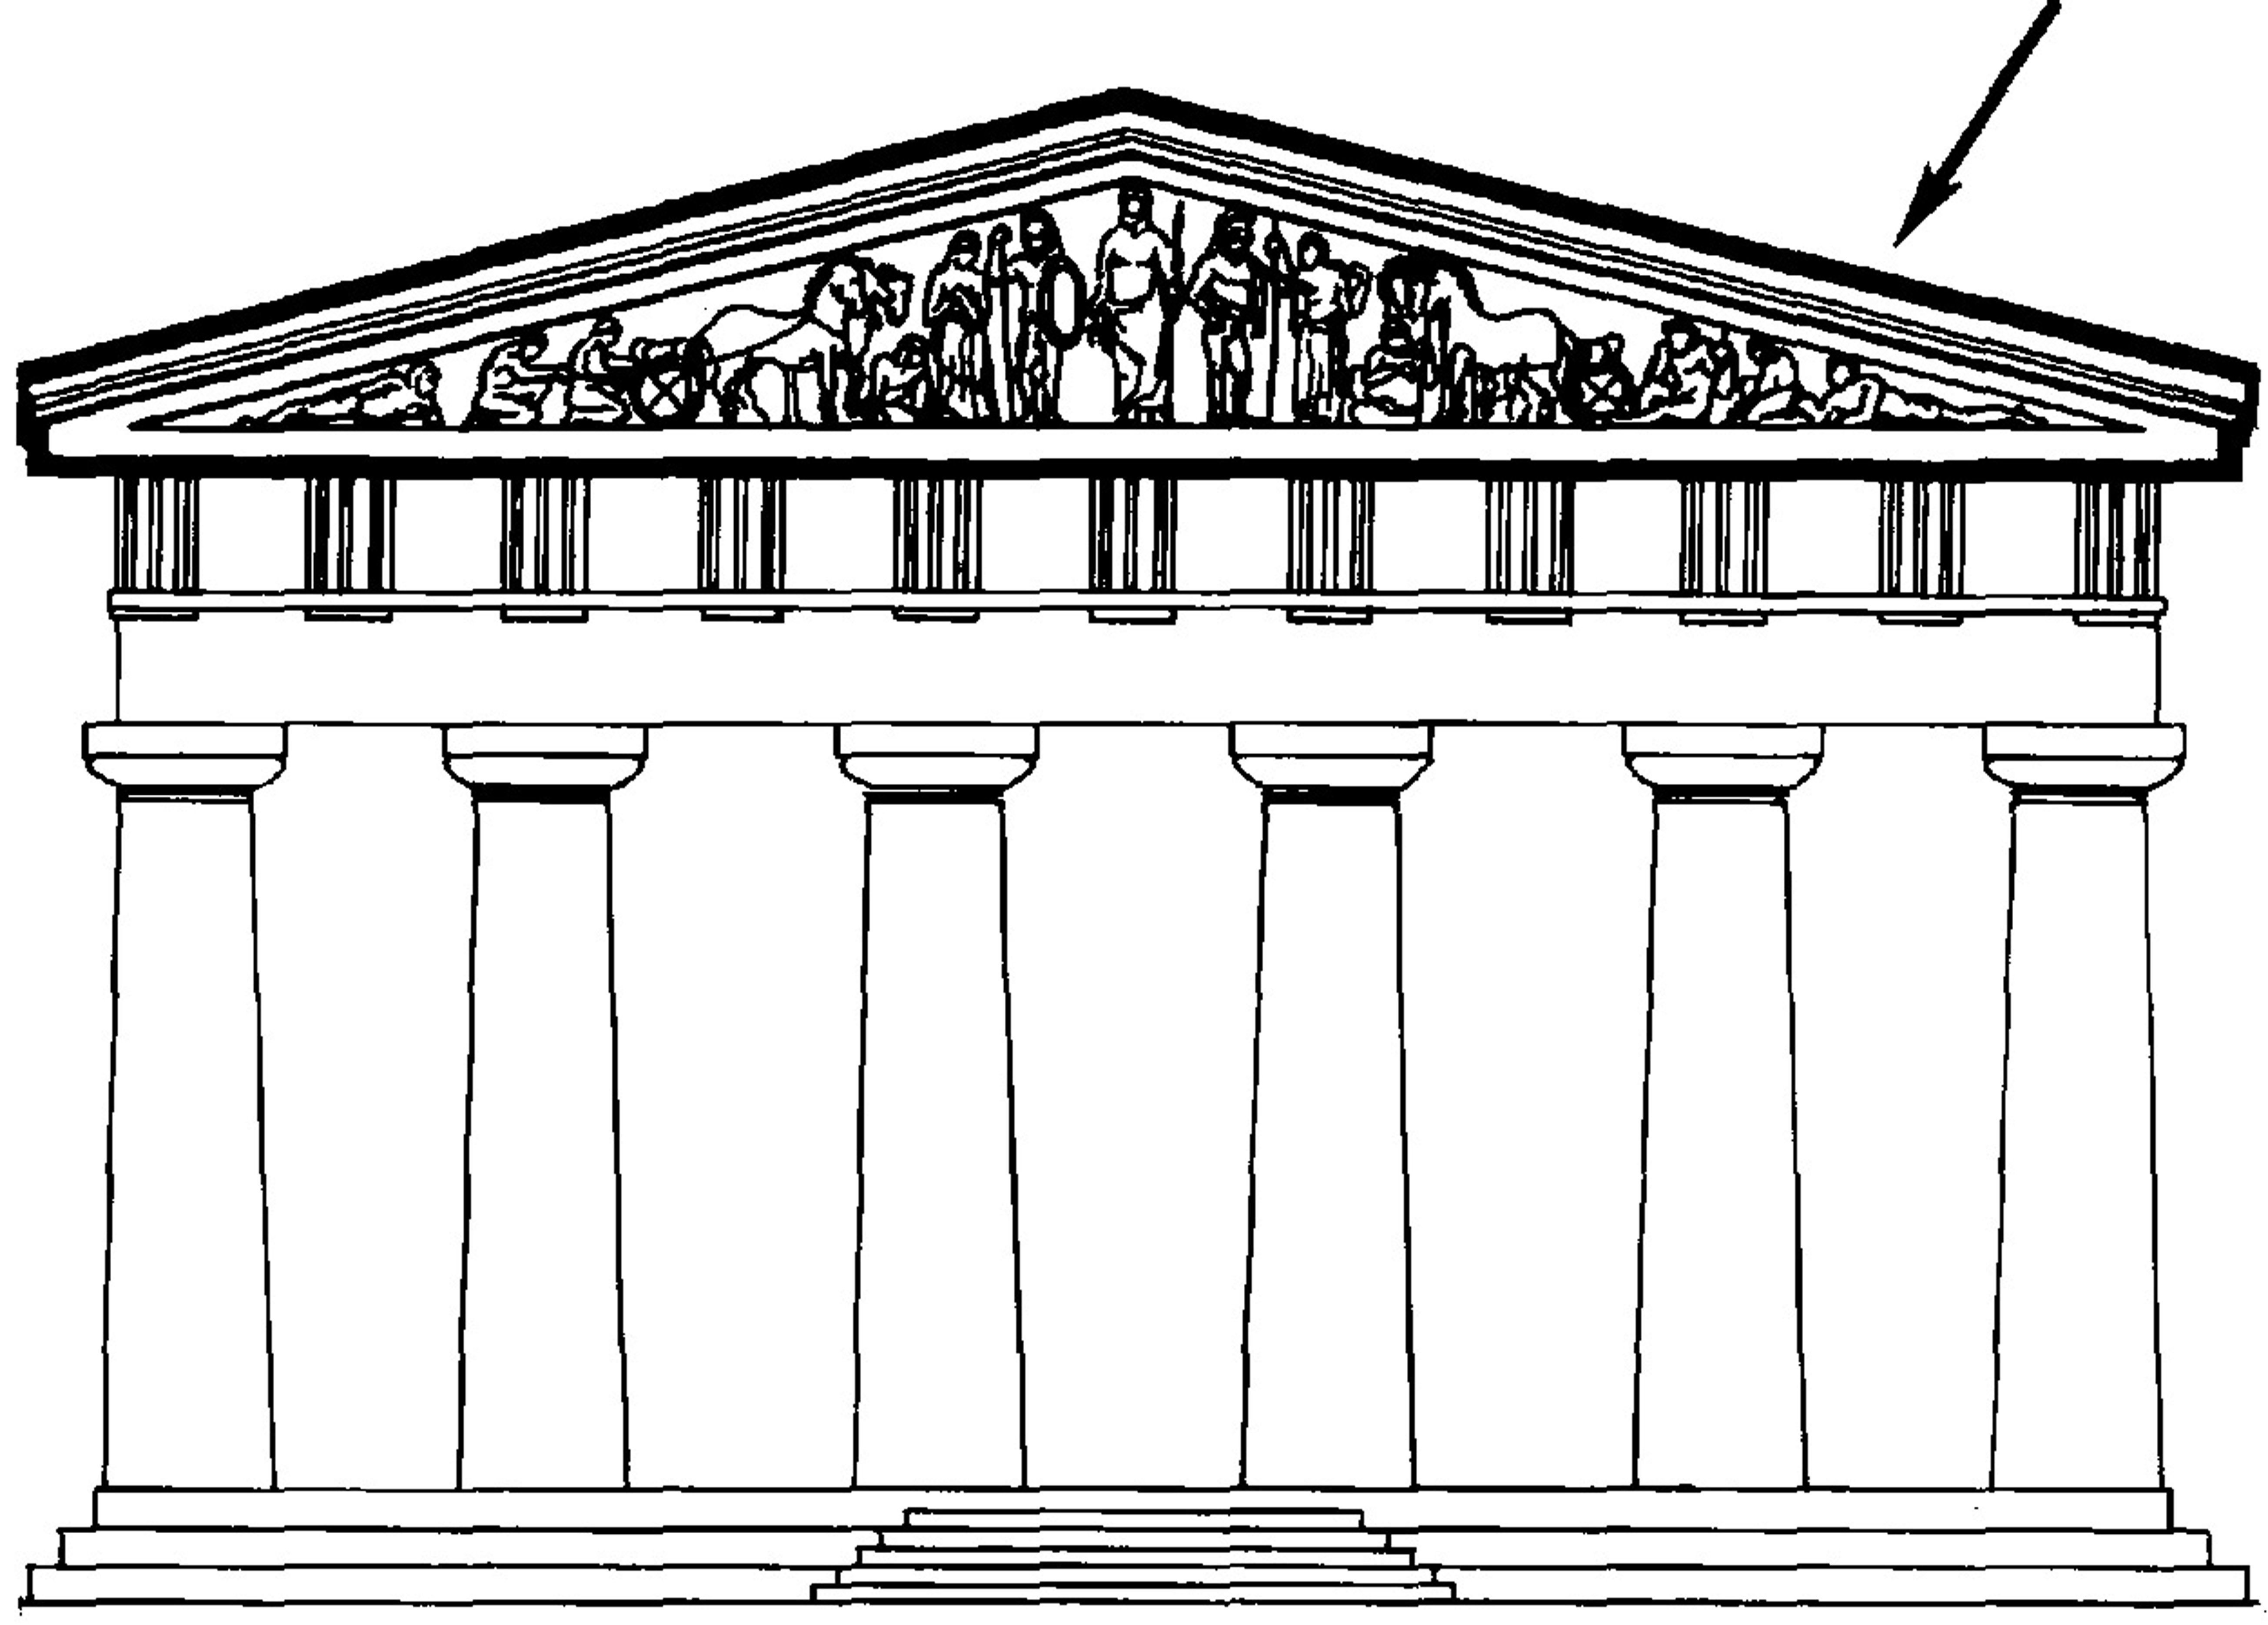 Фронтон в архитектуре древней Греции